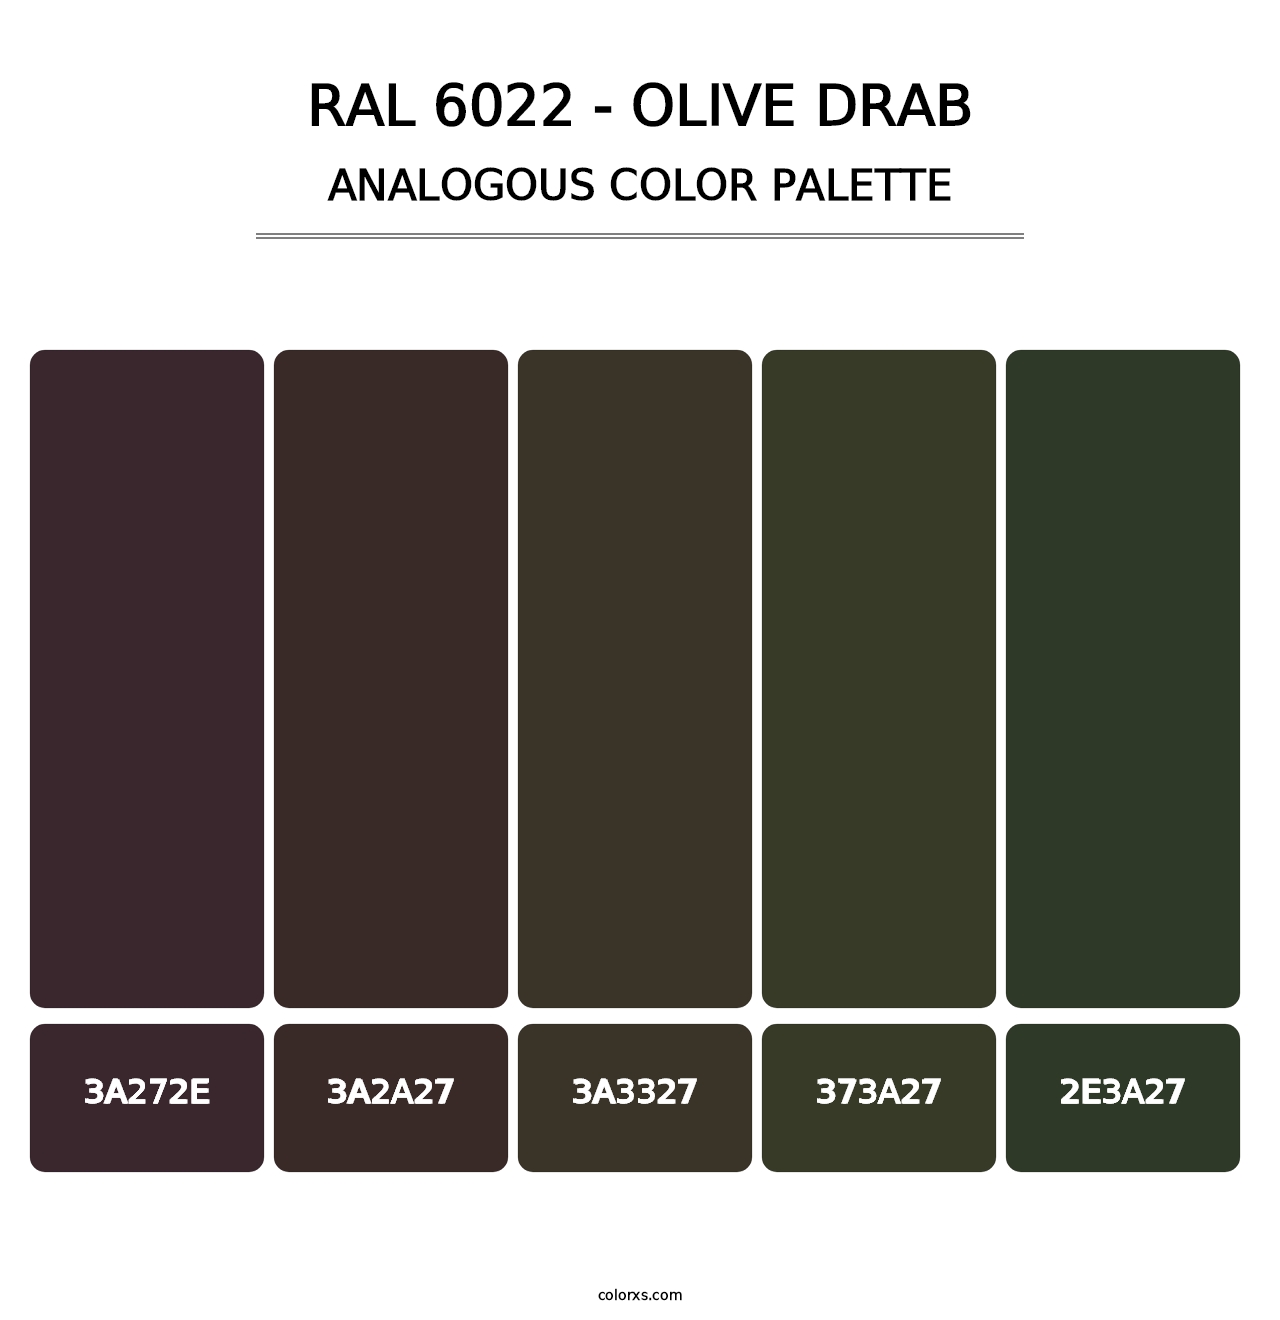 RAL 6022 - Olive Drab - Analogous Color Palette